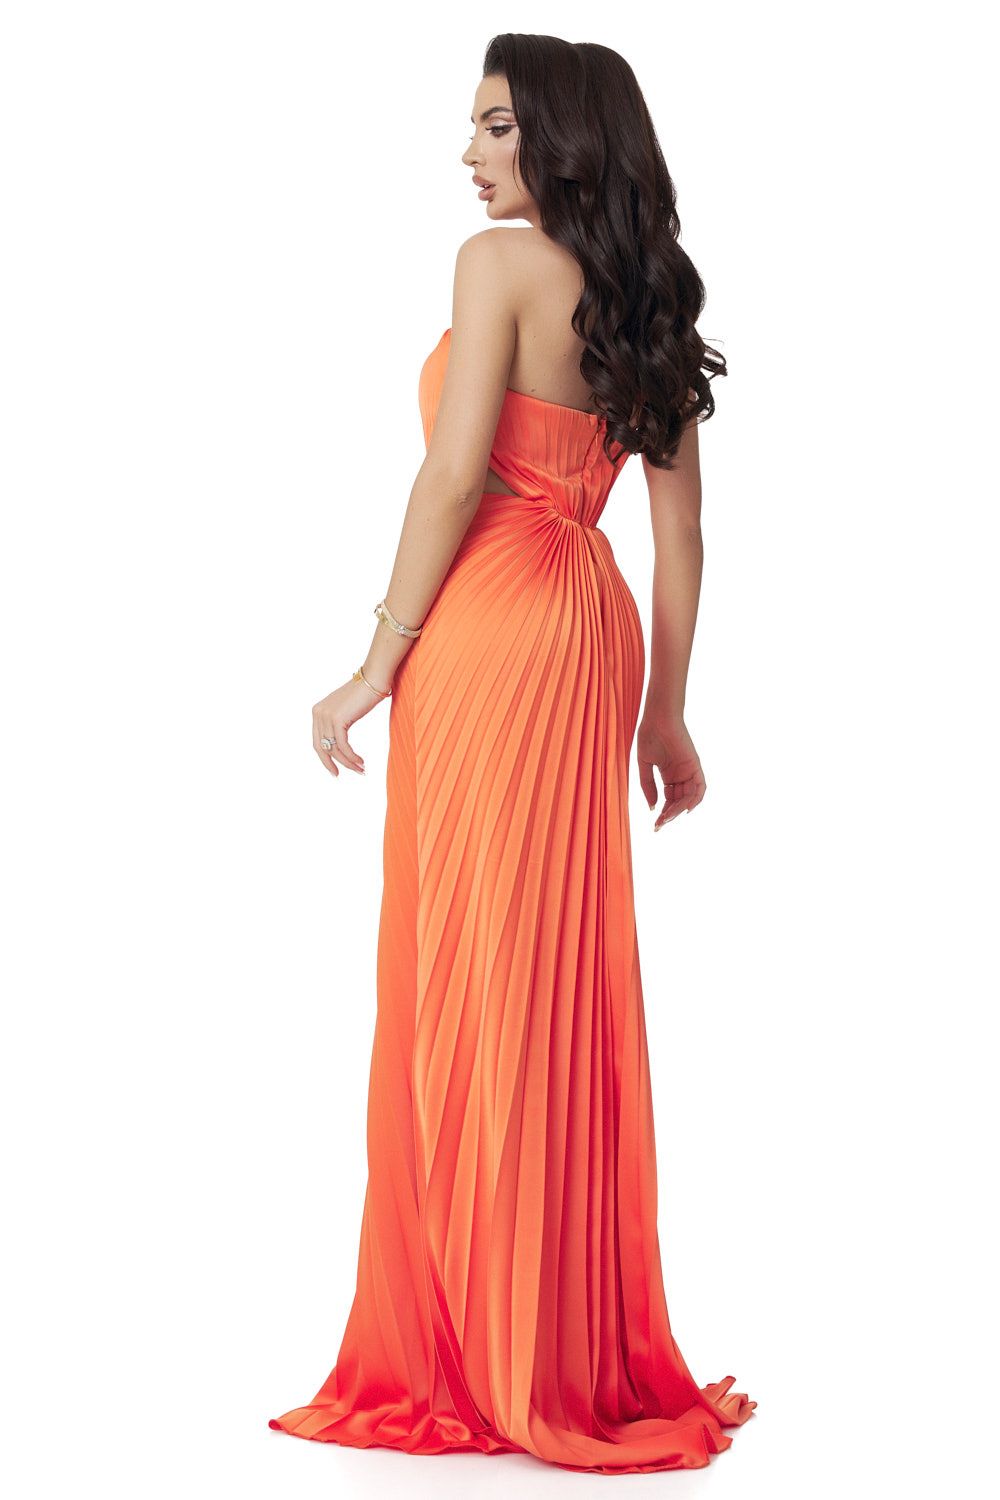 Long orange satin dress for women Zyanya Bogas